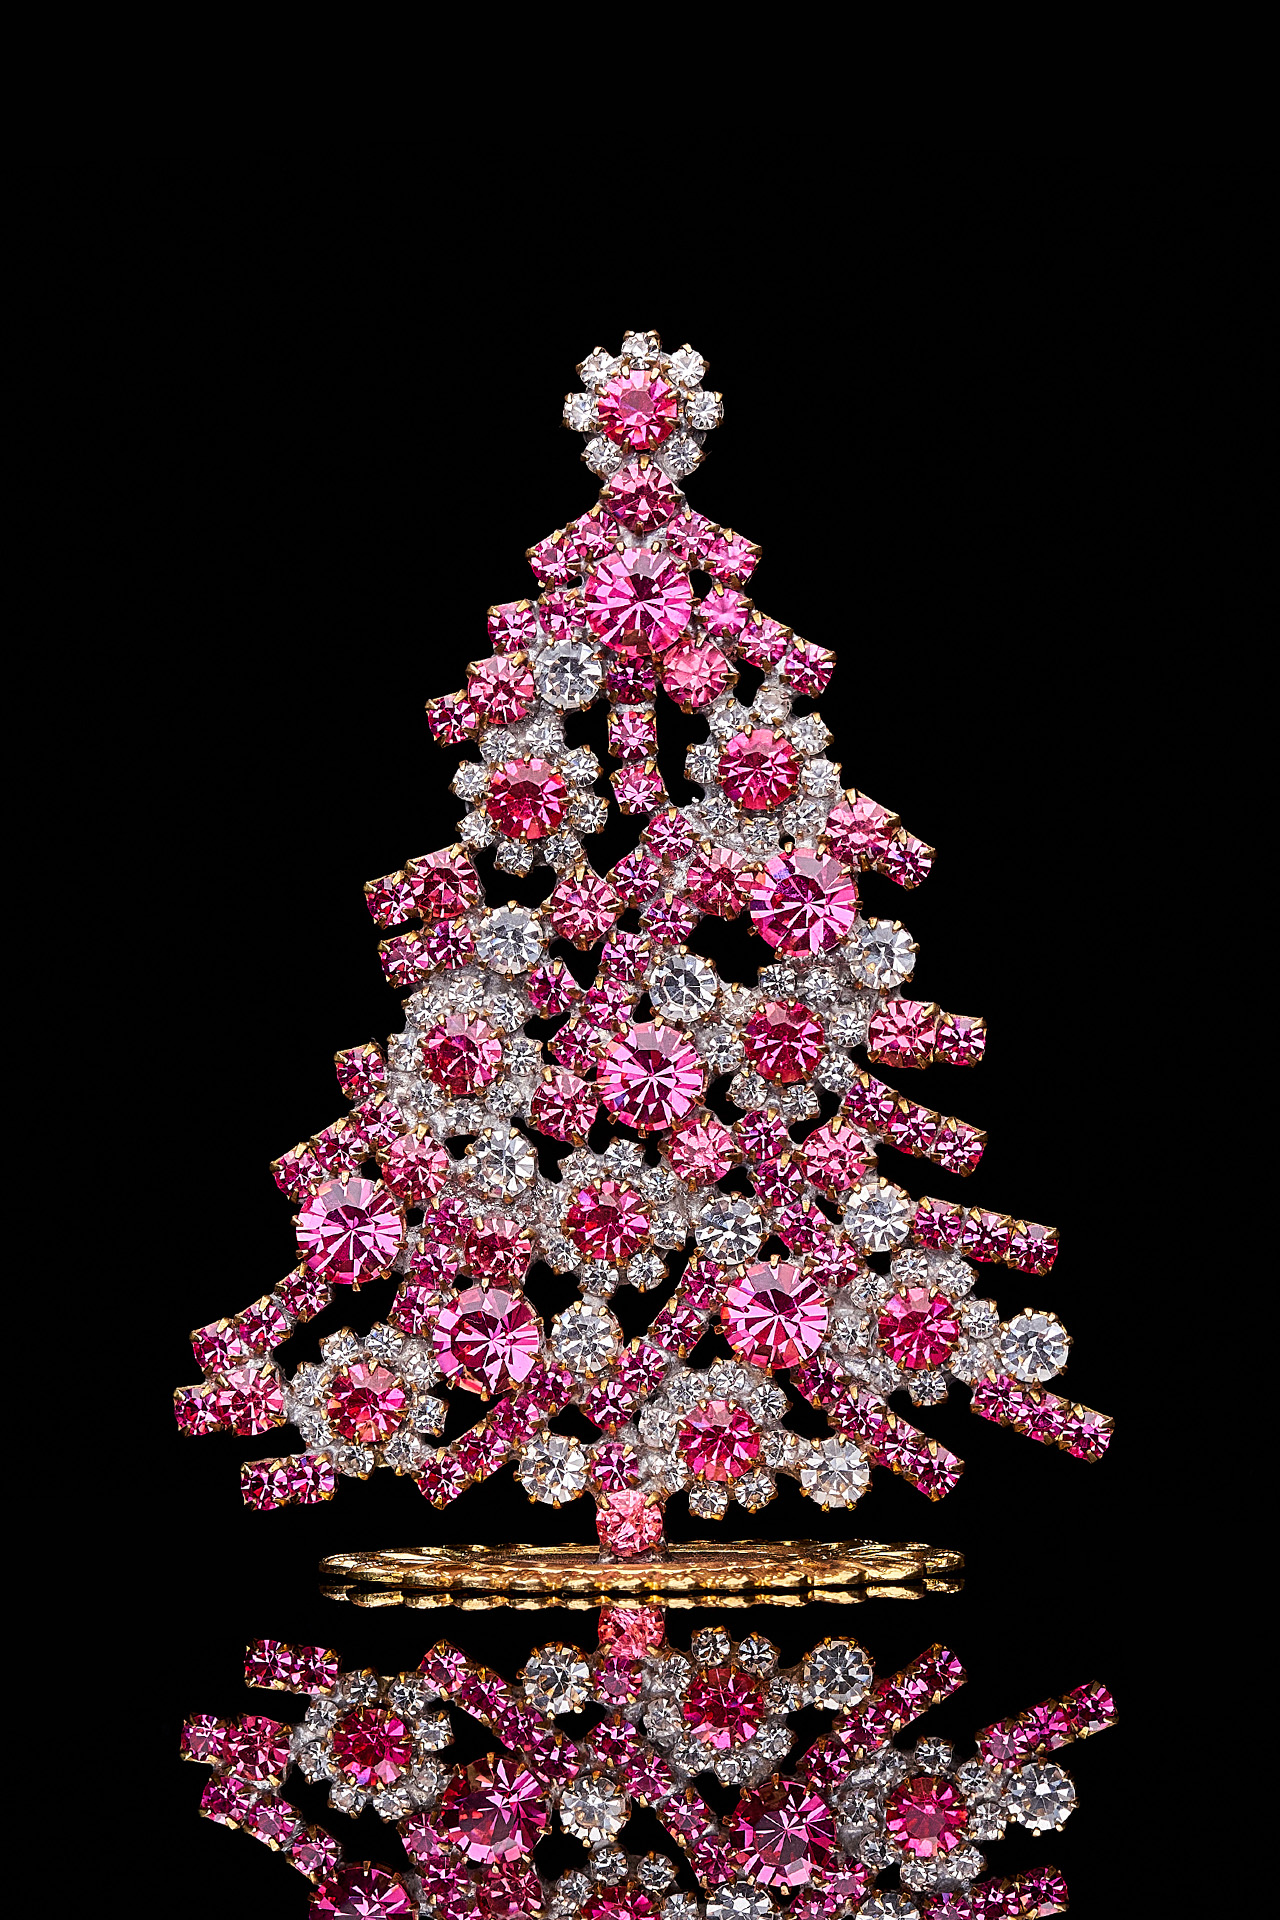 Luminous Christmas tree handmade with pink rhinestones